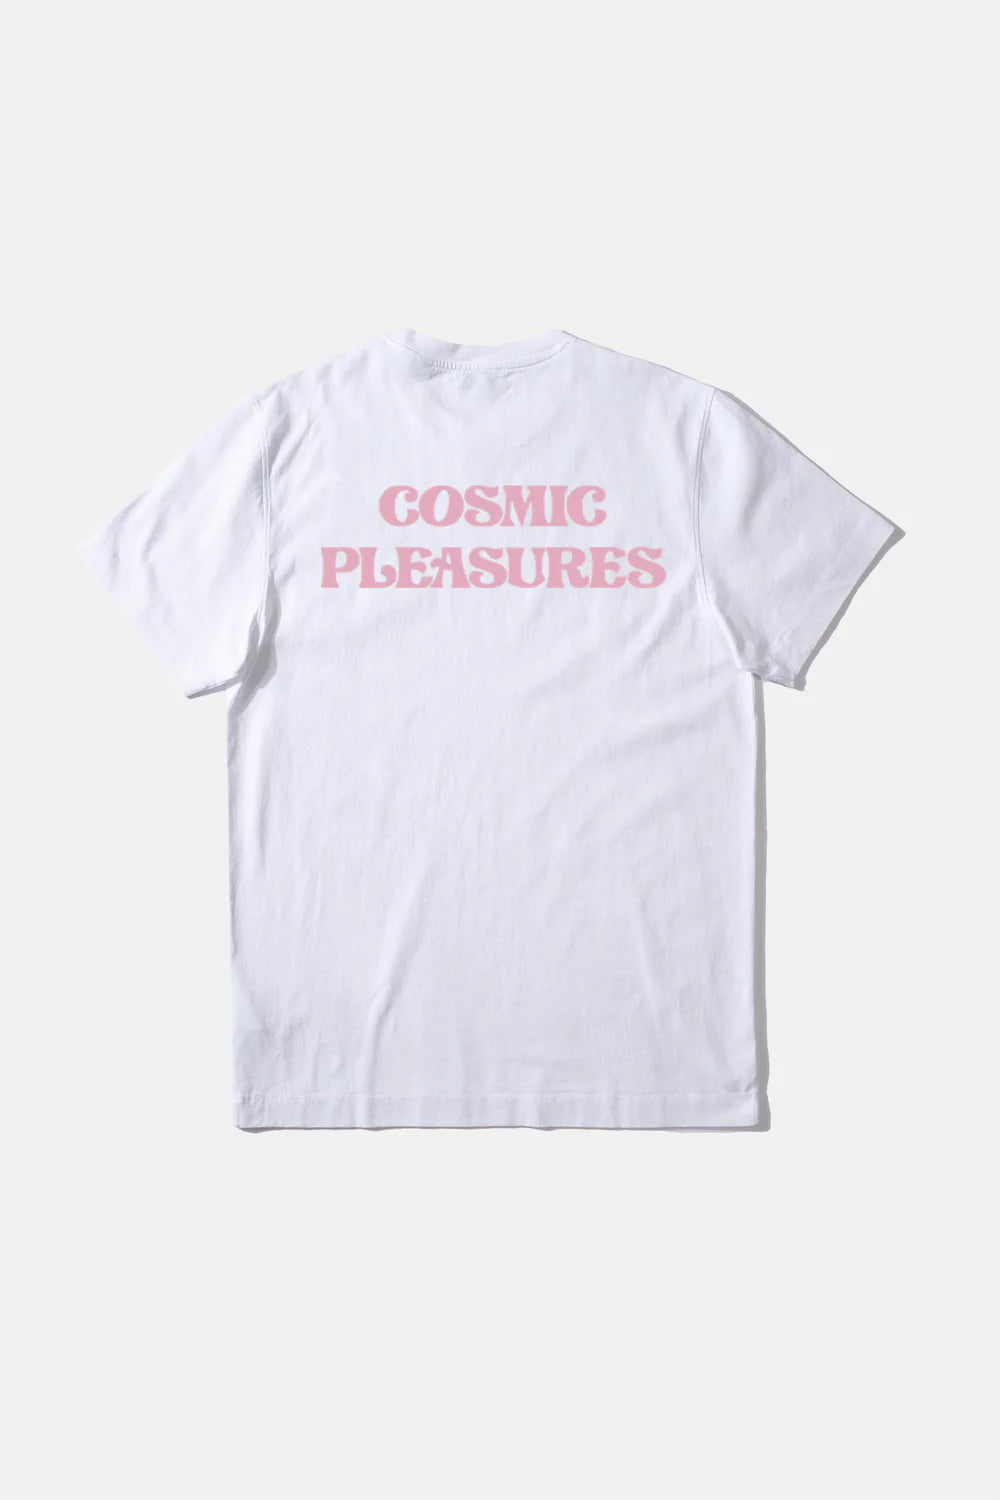 Edmmond Studios Cosmic Pleasures White T-Shirt